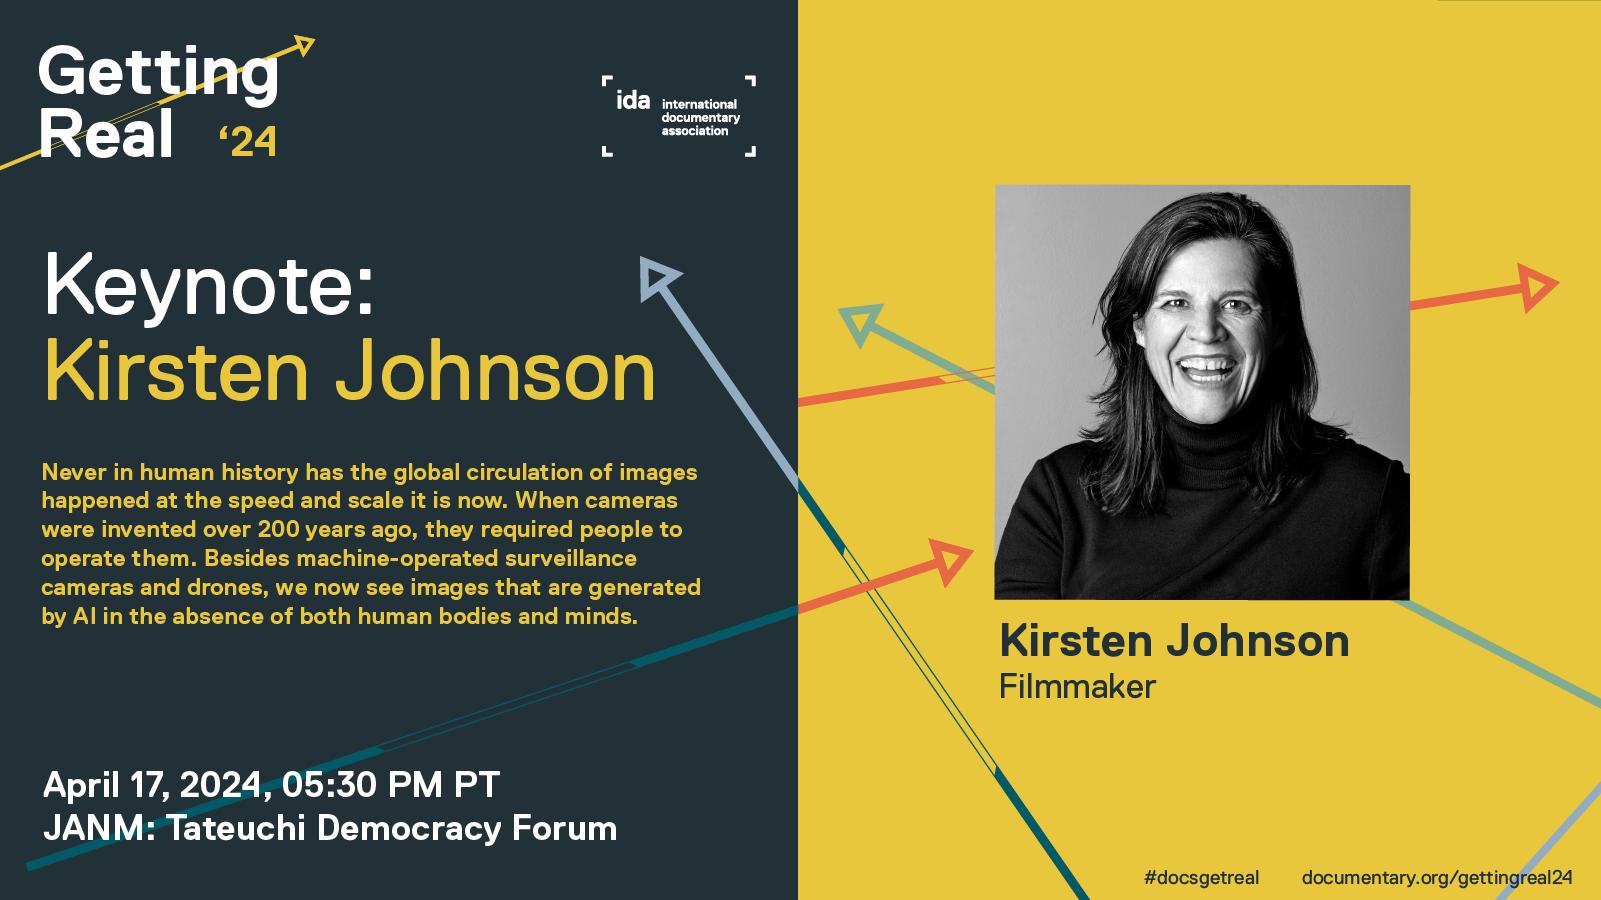 5:30PM Keynote: Kirsten Johnson